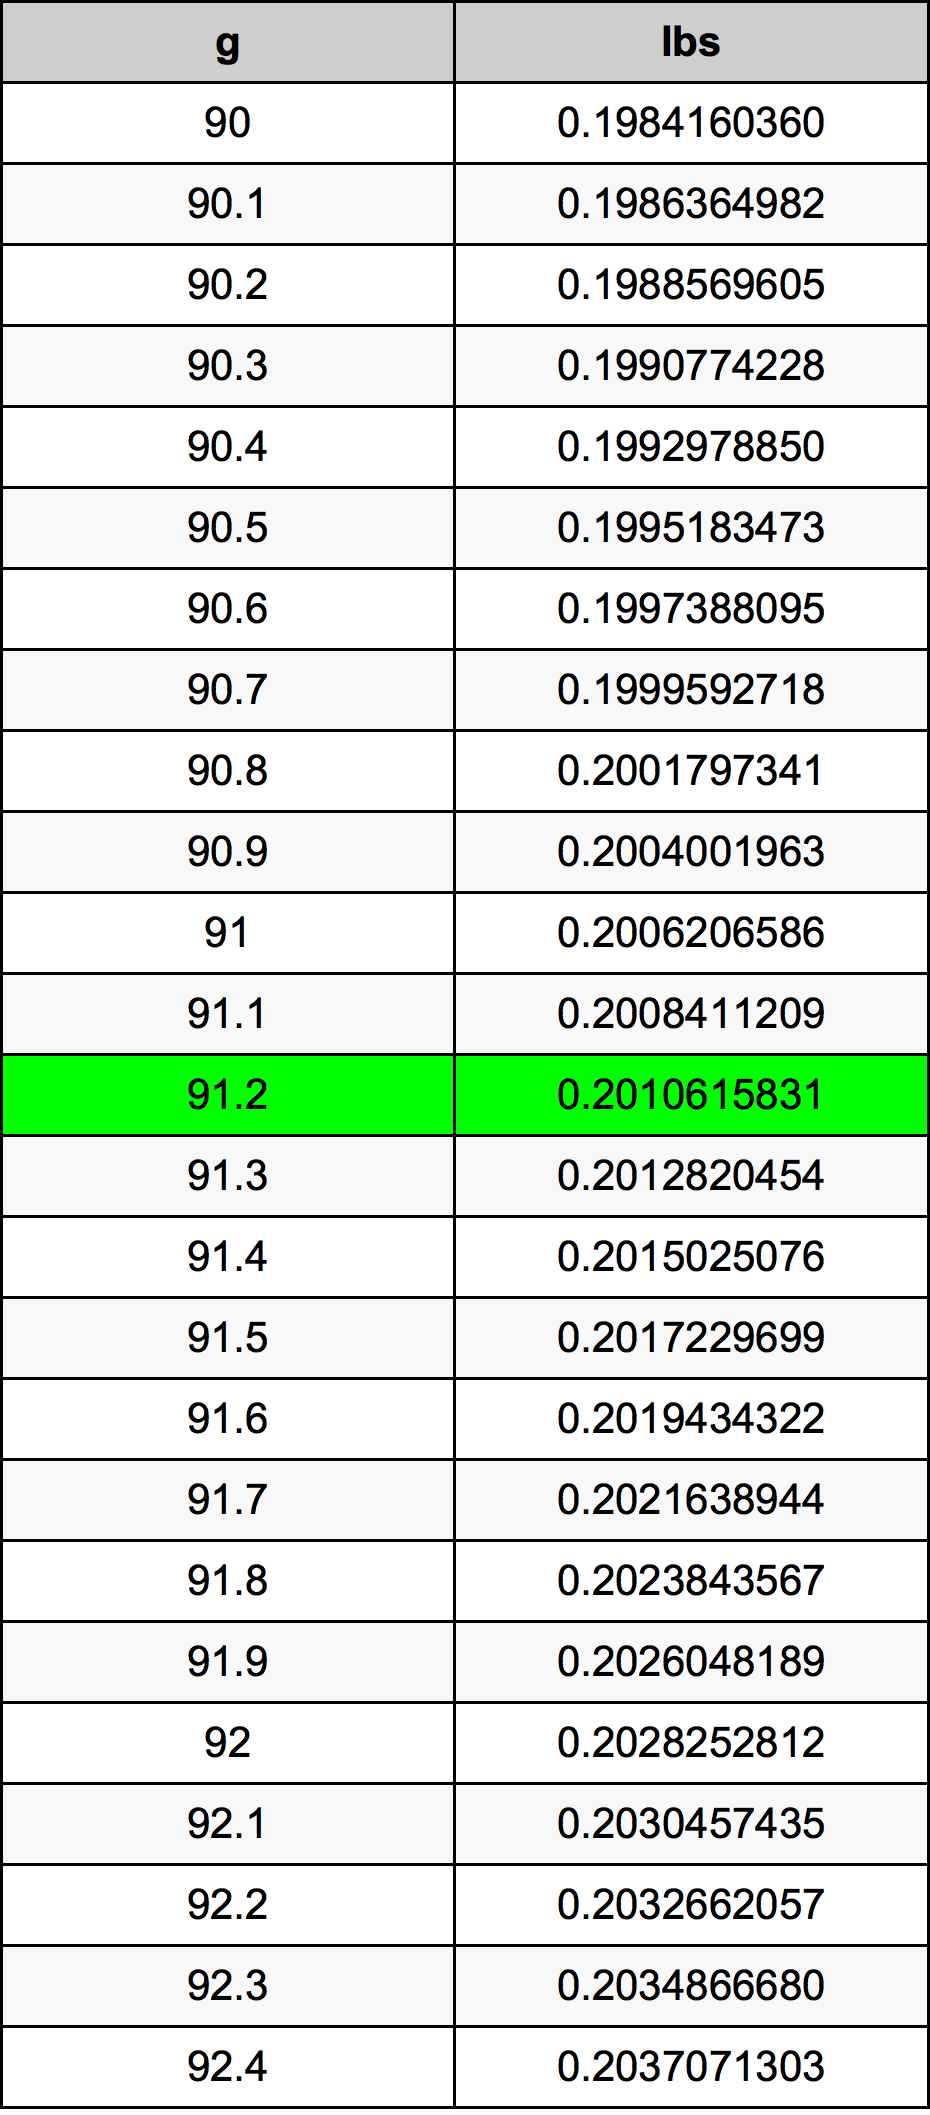 91.2 غرام جدول تحويل